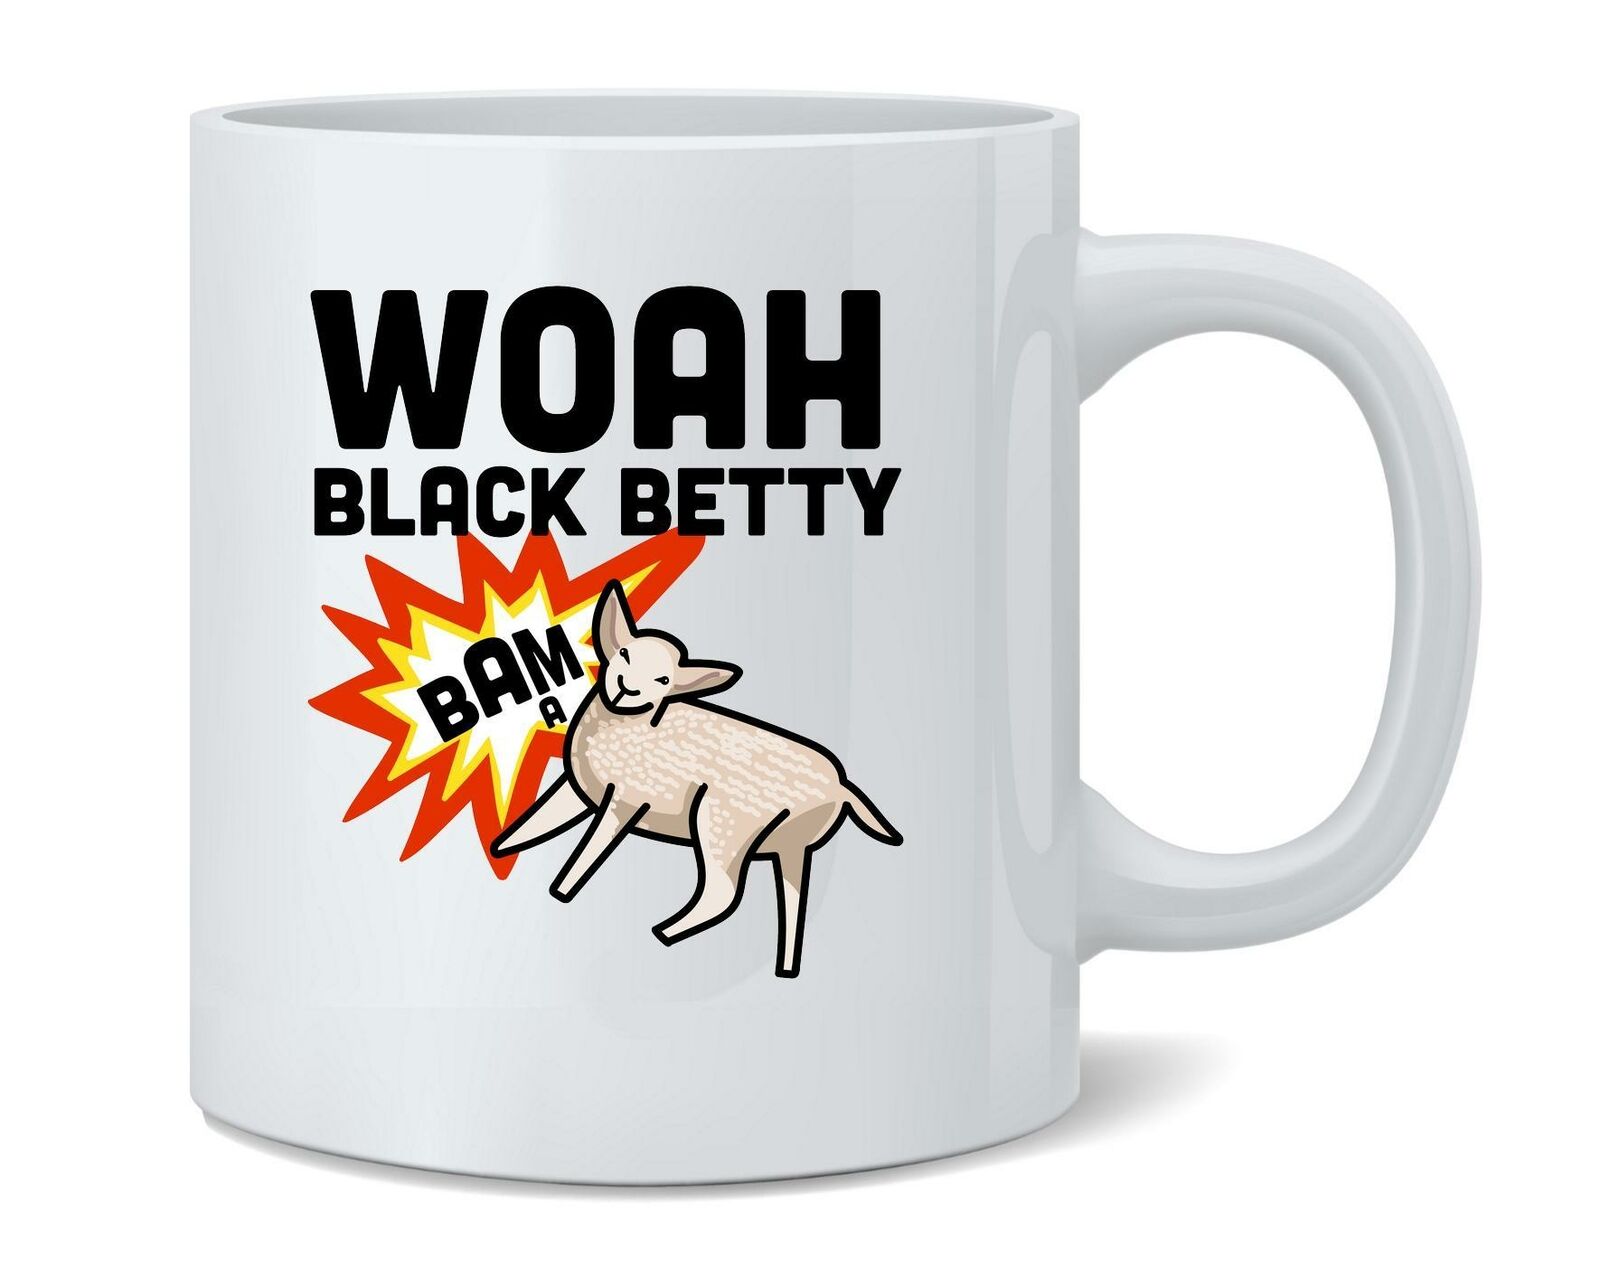 Woah Black Betty Bam A Lamb Funny Song Meme Ceramic Coffee Mug Tea Cup 12 oz